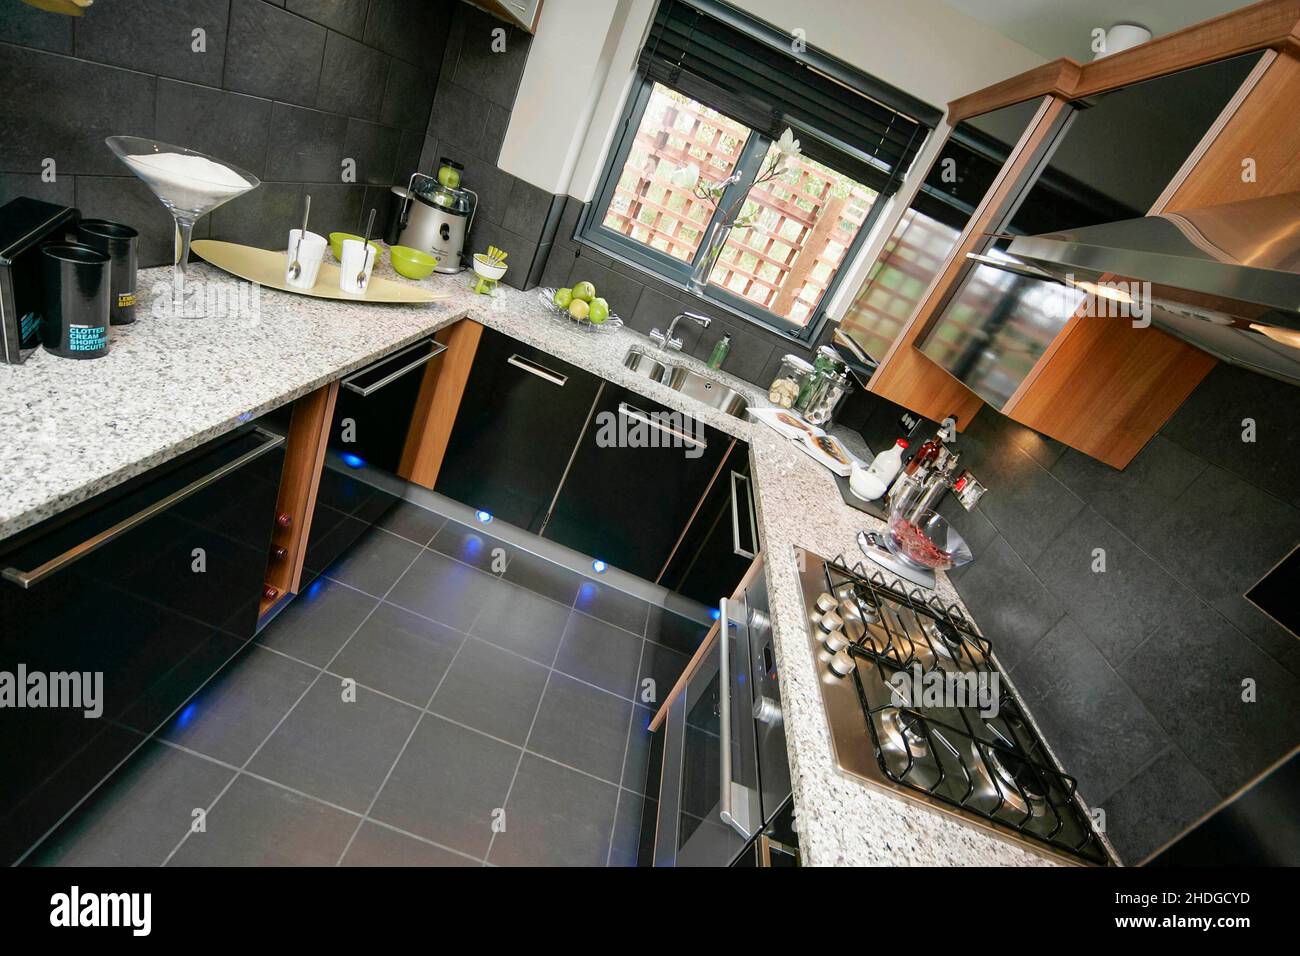 Modern small kitchen,black units,quartz worktop,plinth lighting,floor lighting,tiled floor. Stock Photo